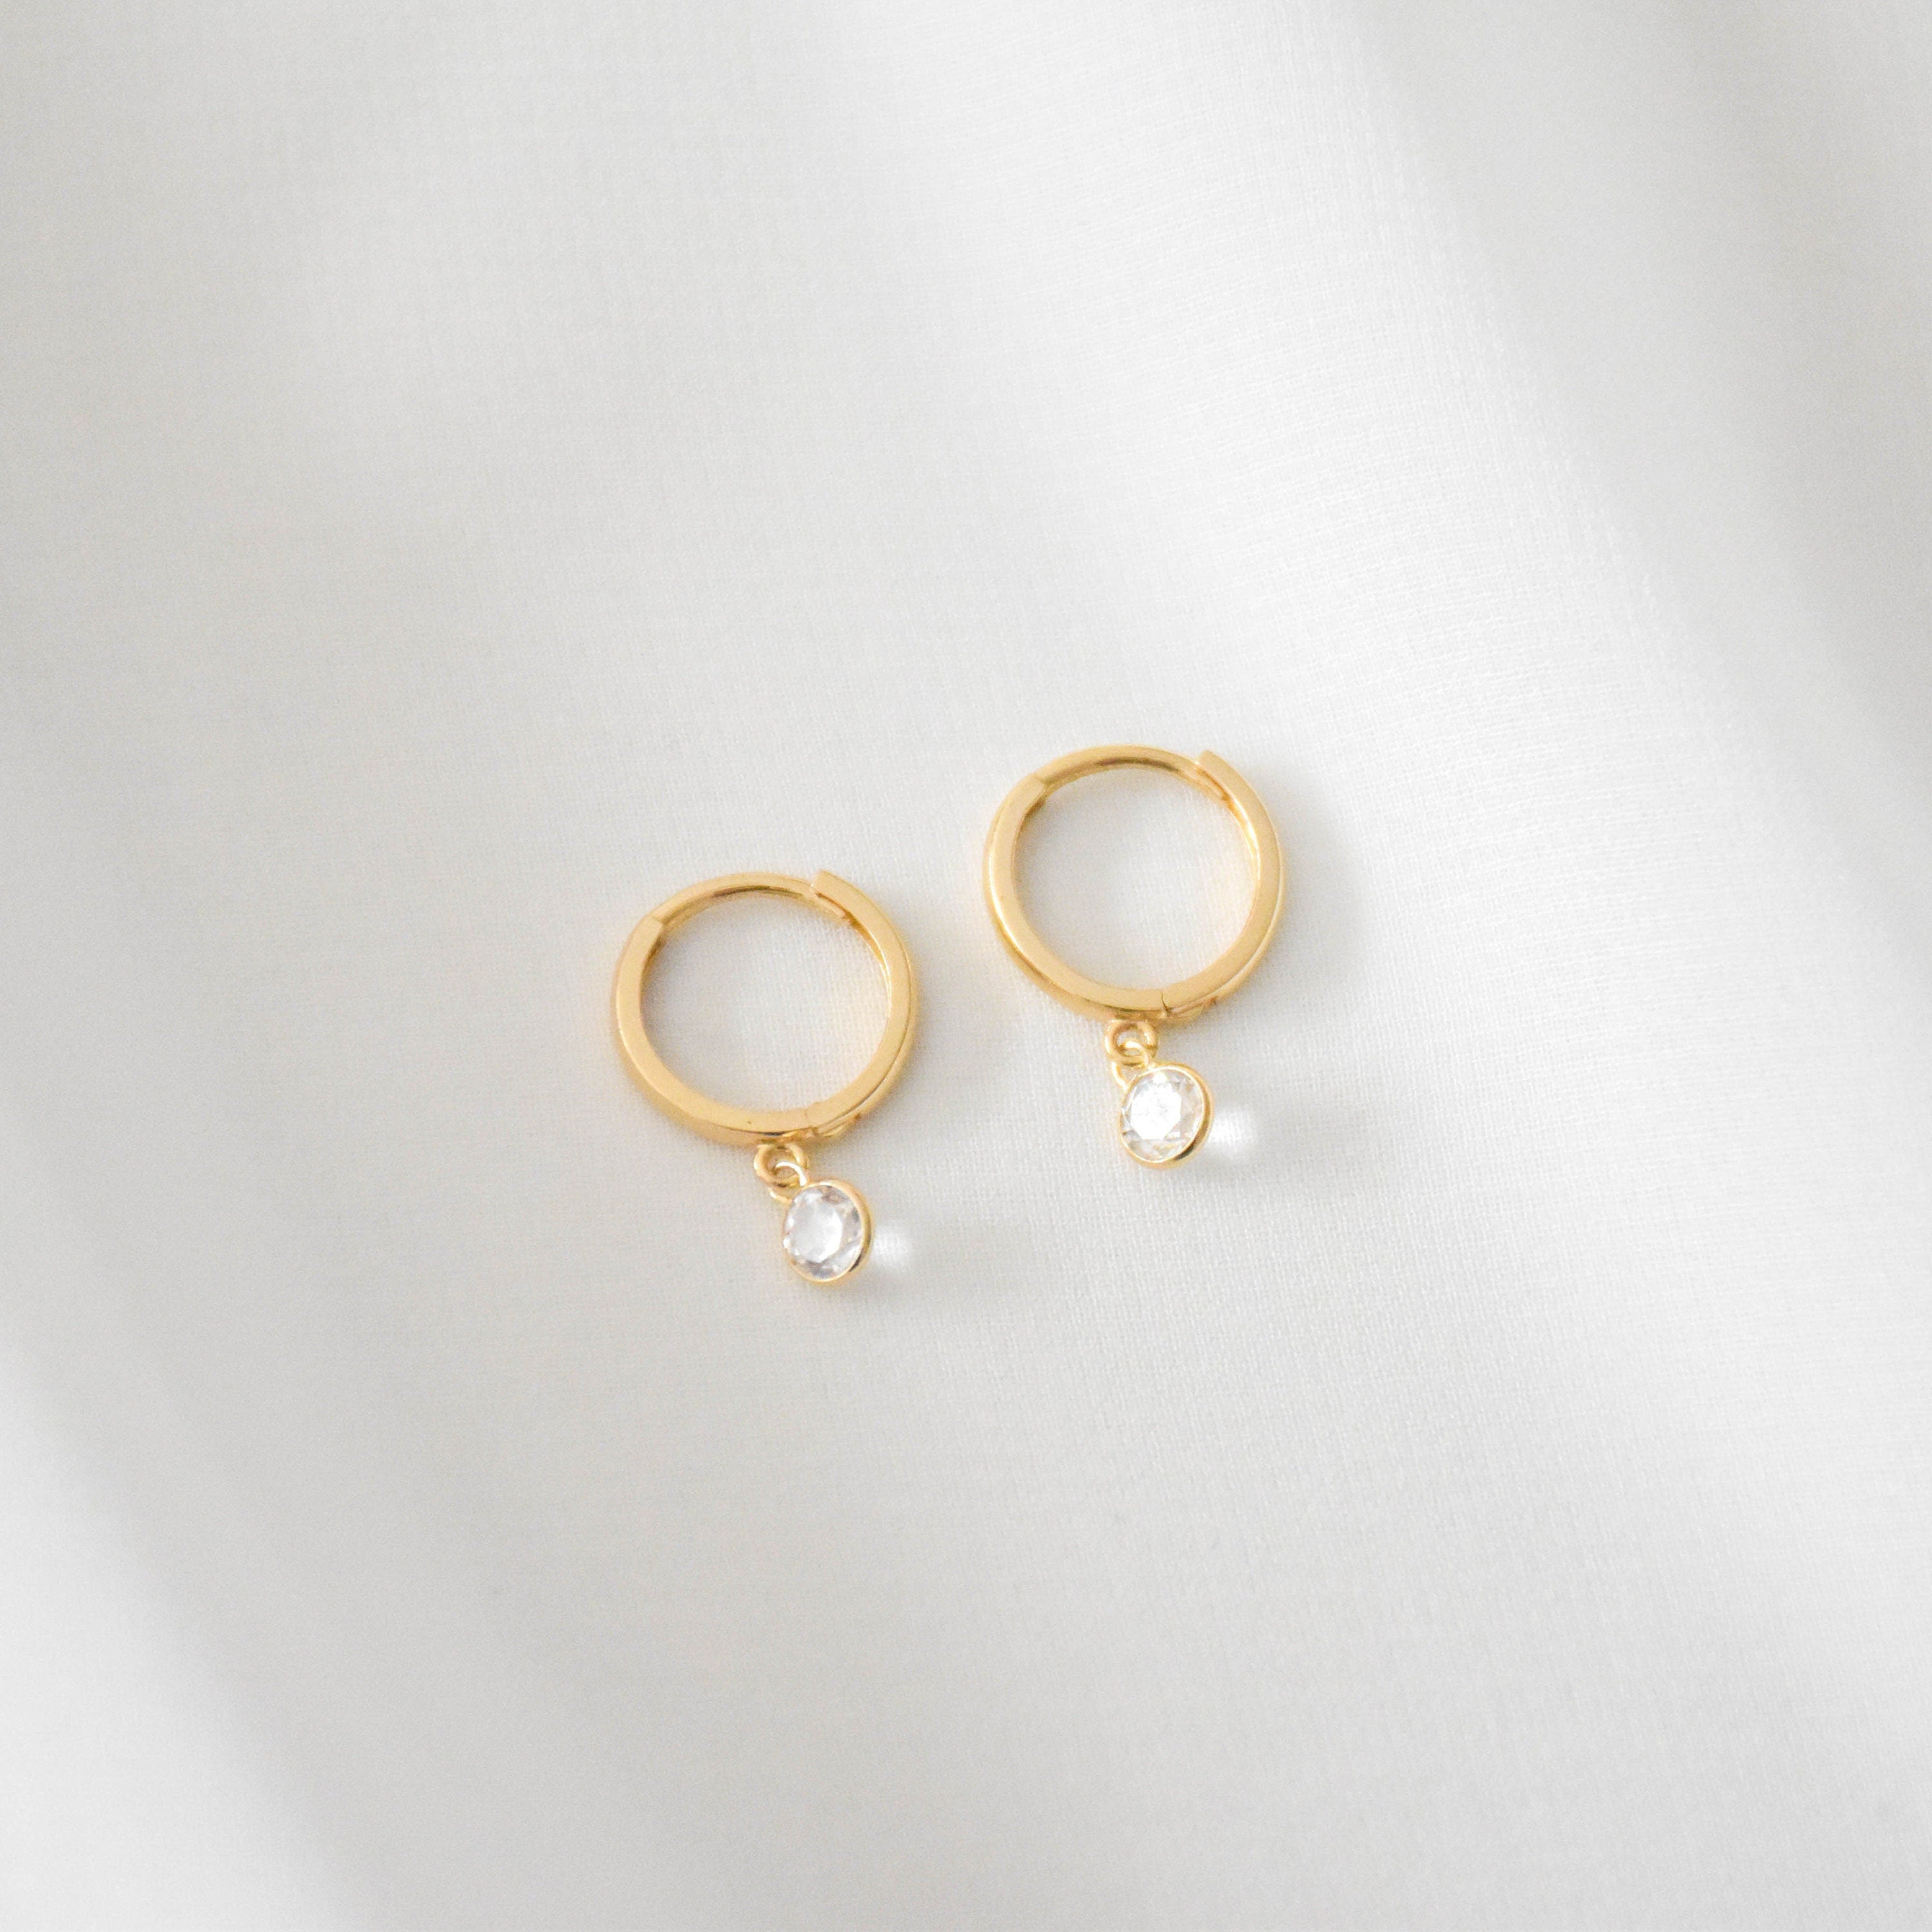 14K SOLID Gold White Topaz Huggie Earrings - Real Gold Huggie Earrings, Solid Gold Huggies, Solid Gold Dangle Hoops, Real Gold Huggies charm |SGE00008